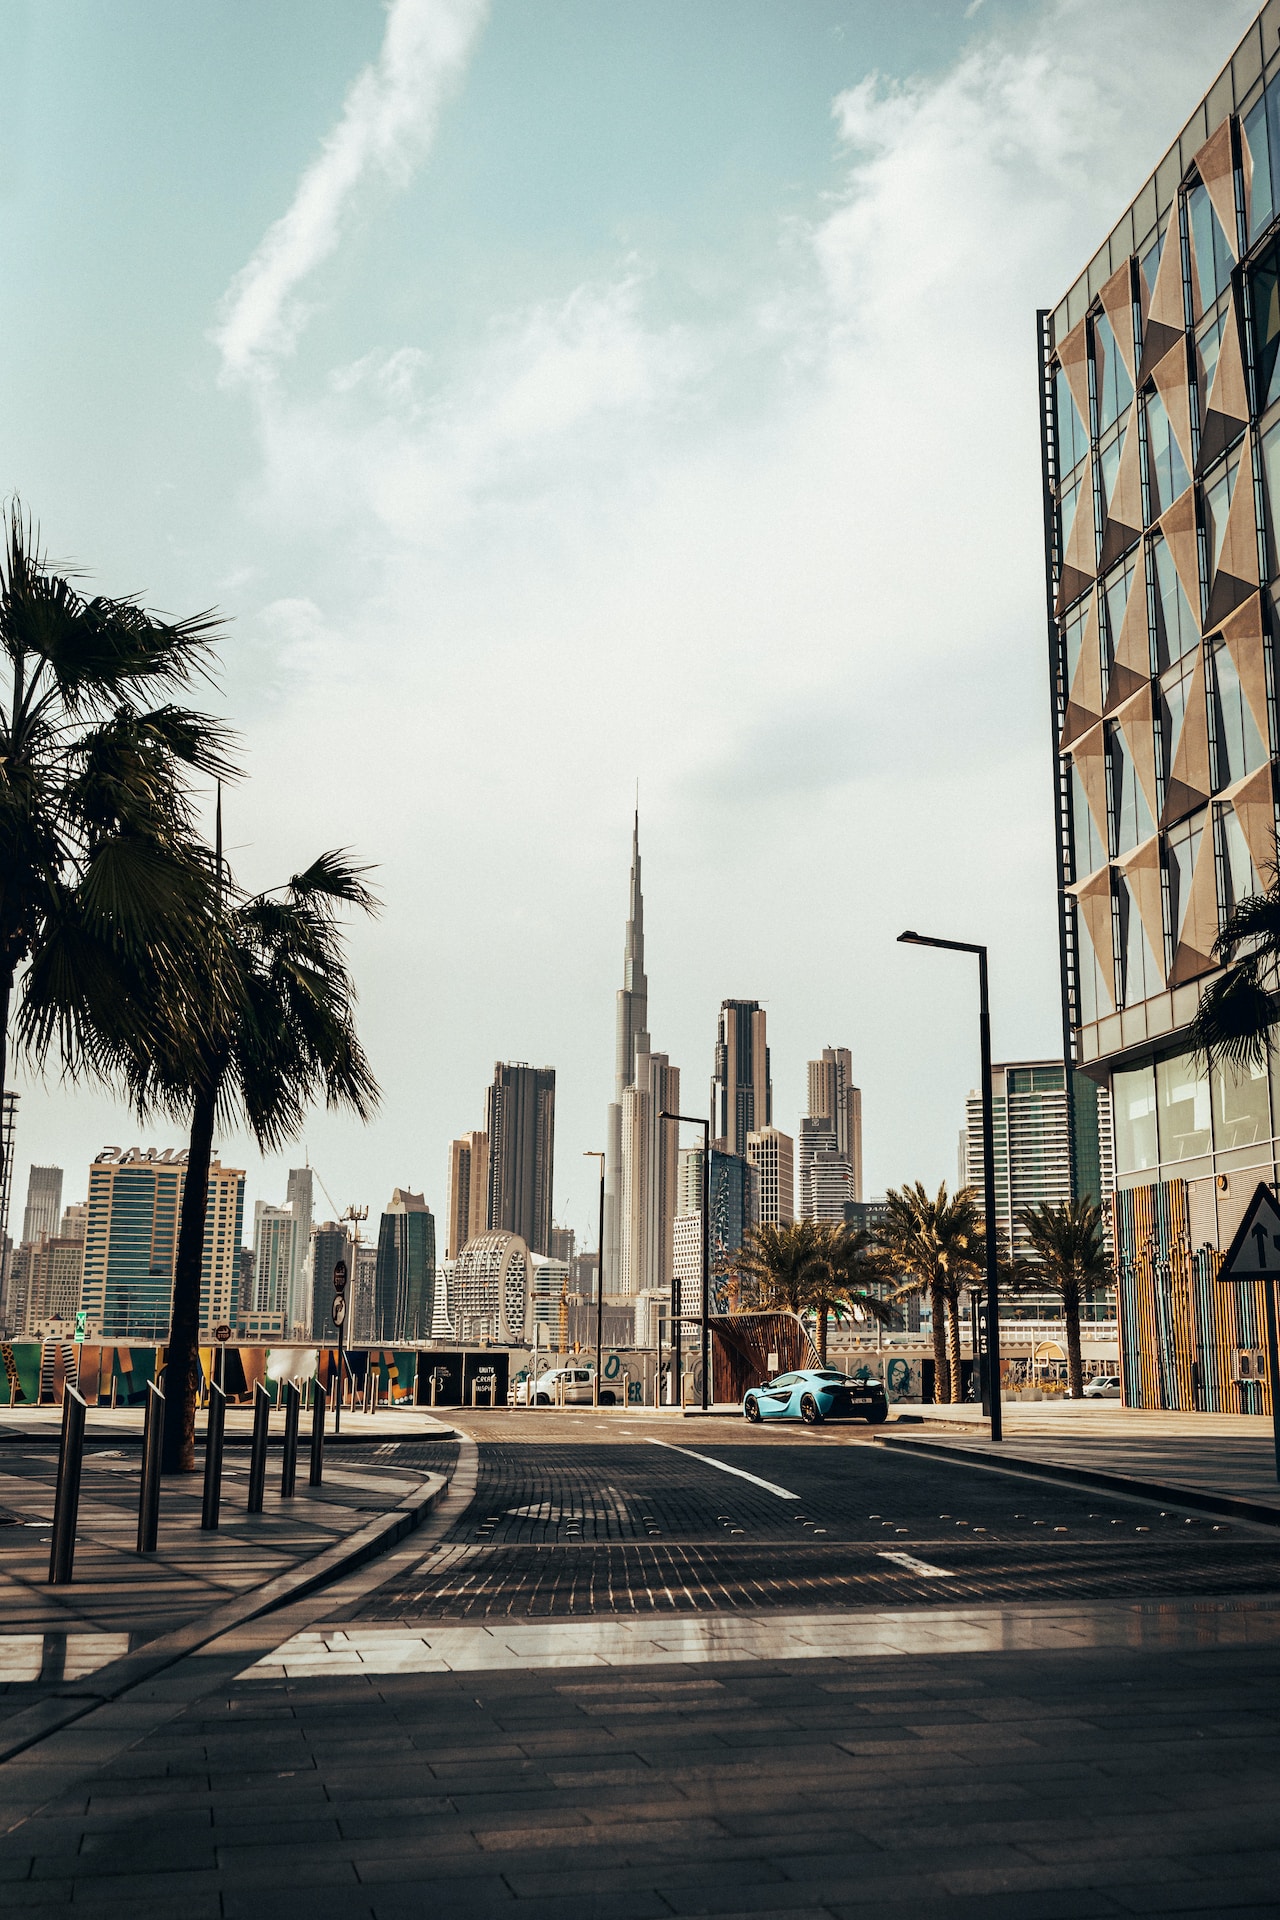 Is 5k Salary Good in Dubai?